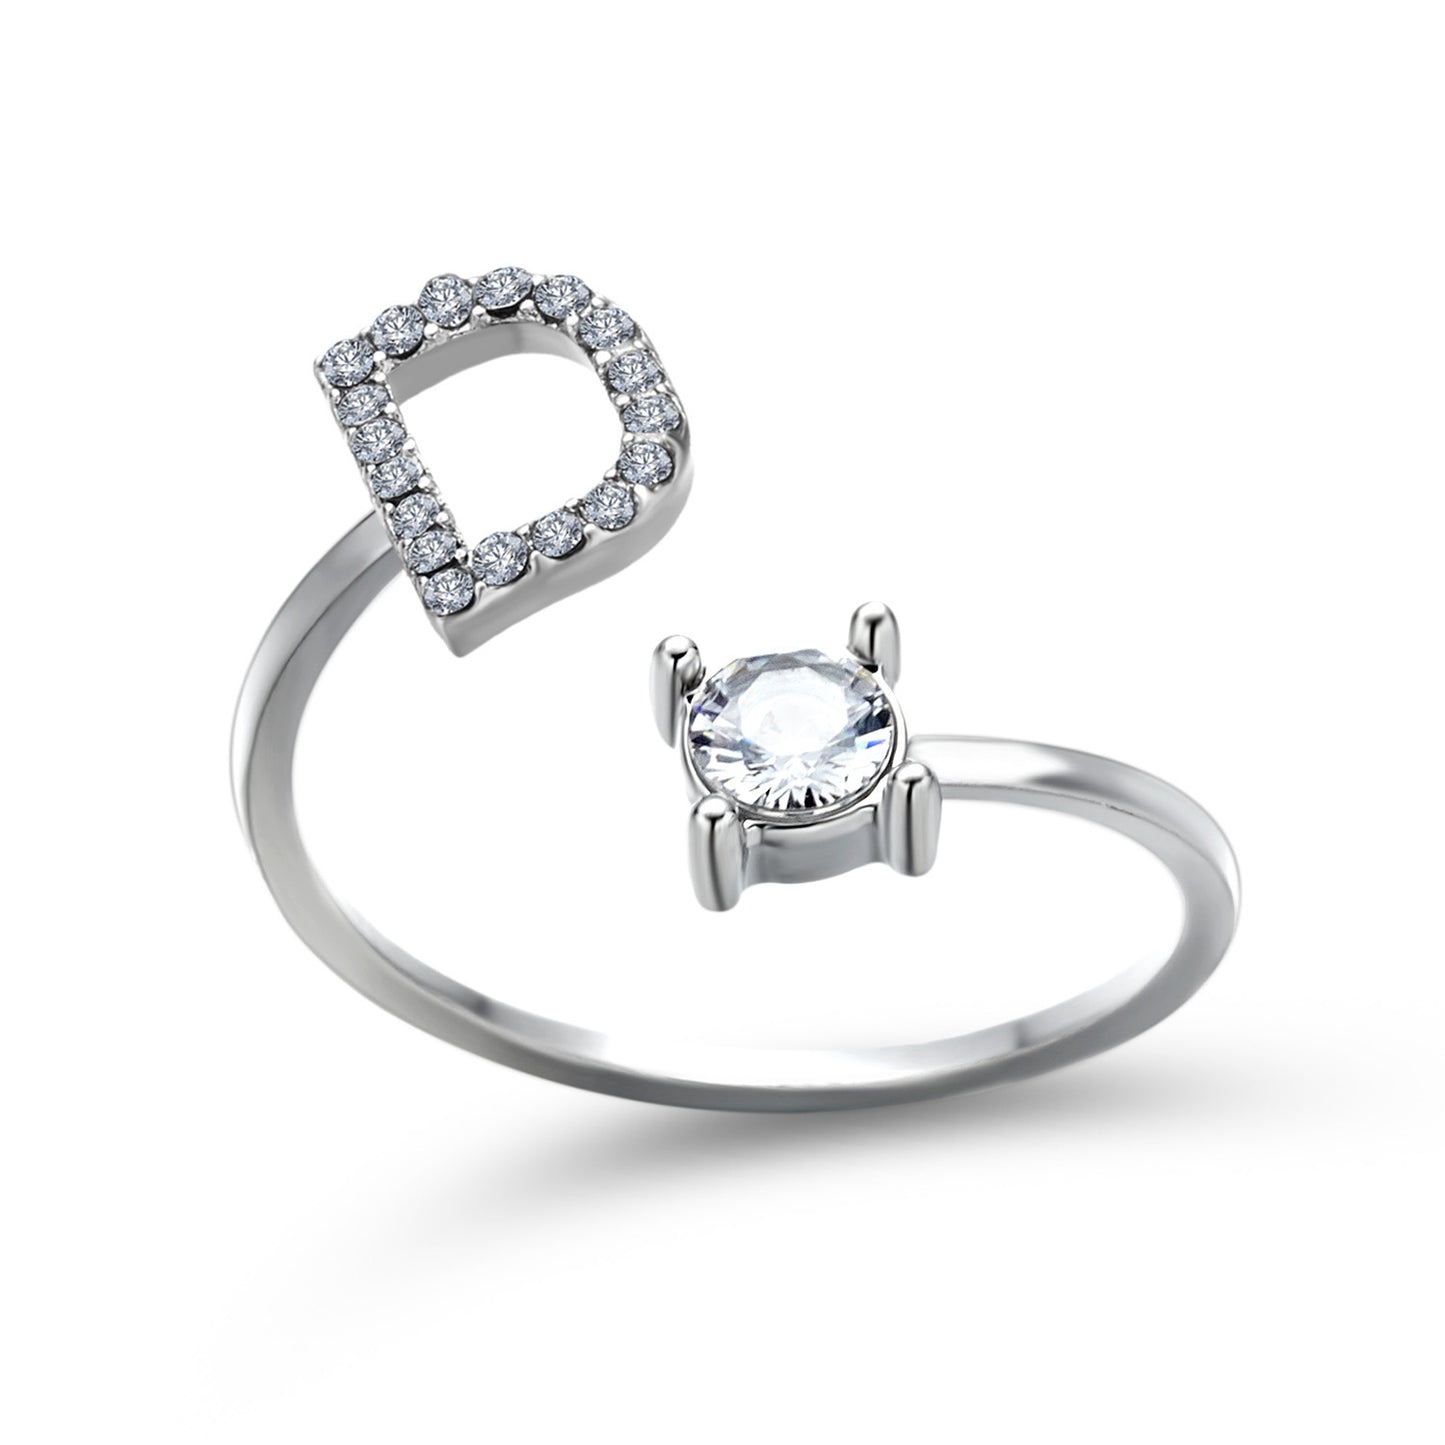 Elegant Adjustable Jewelry Ring